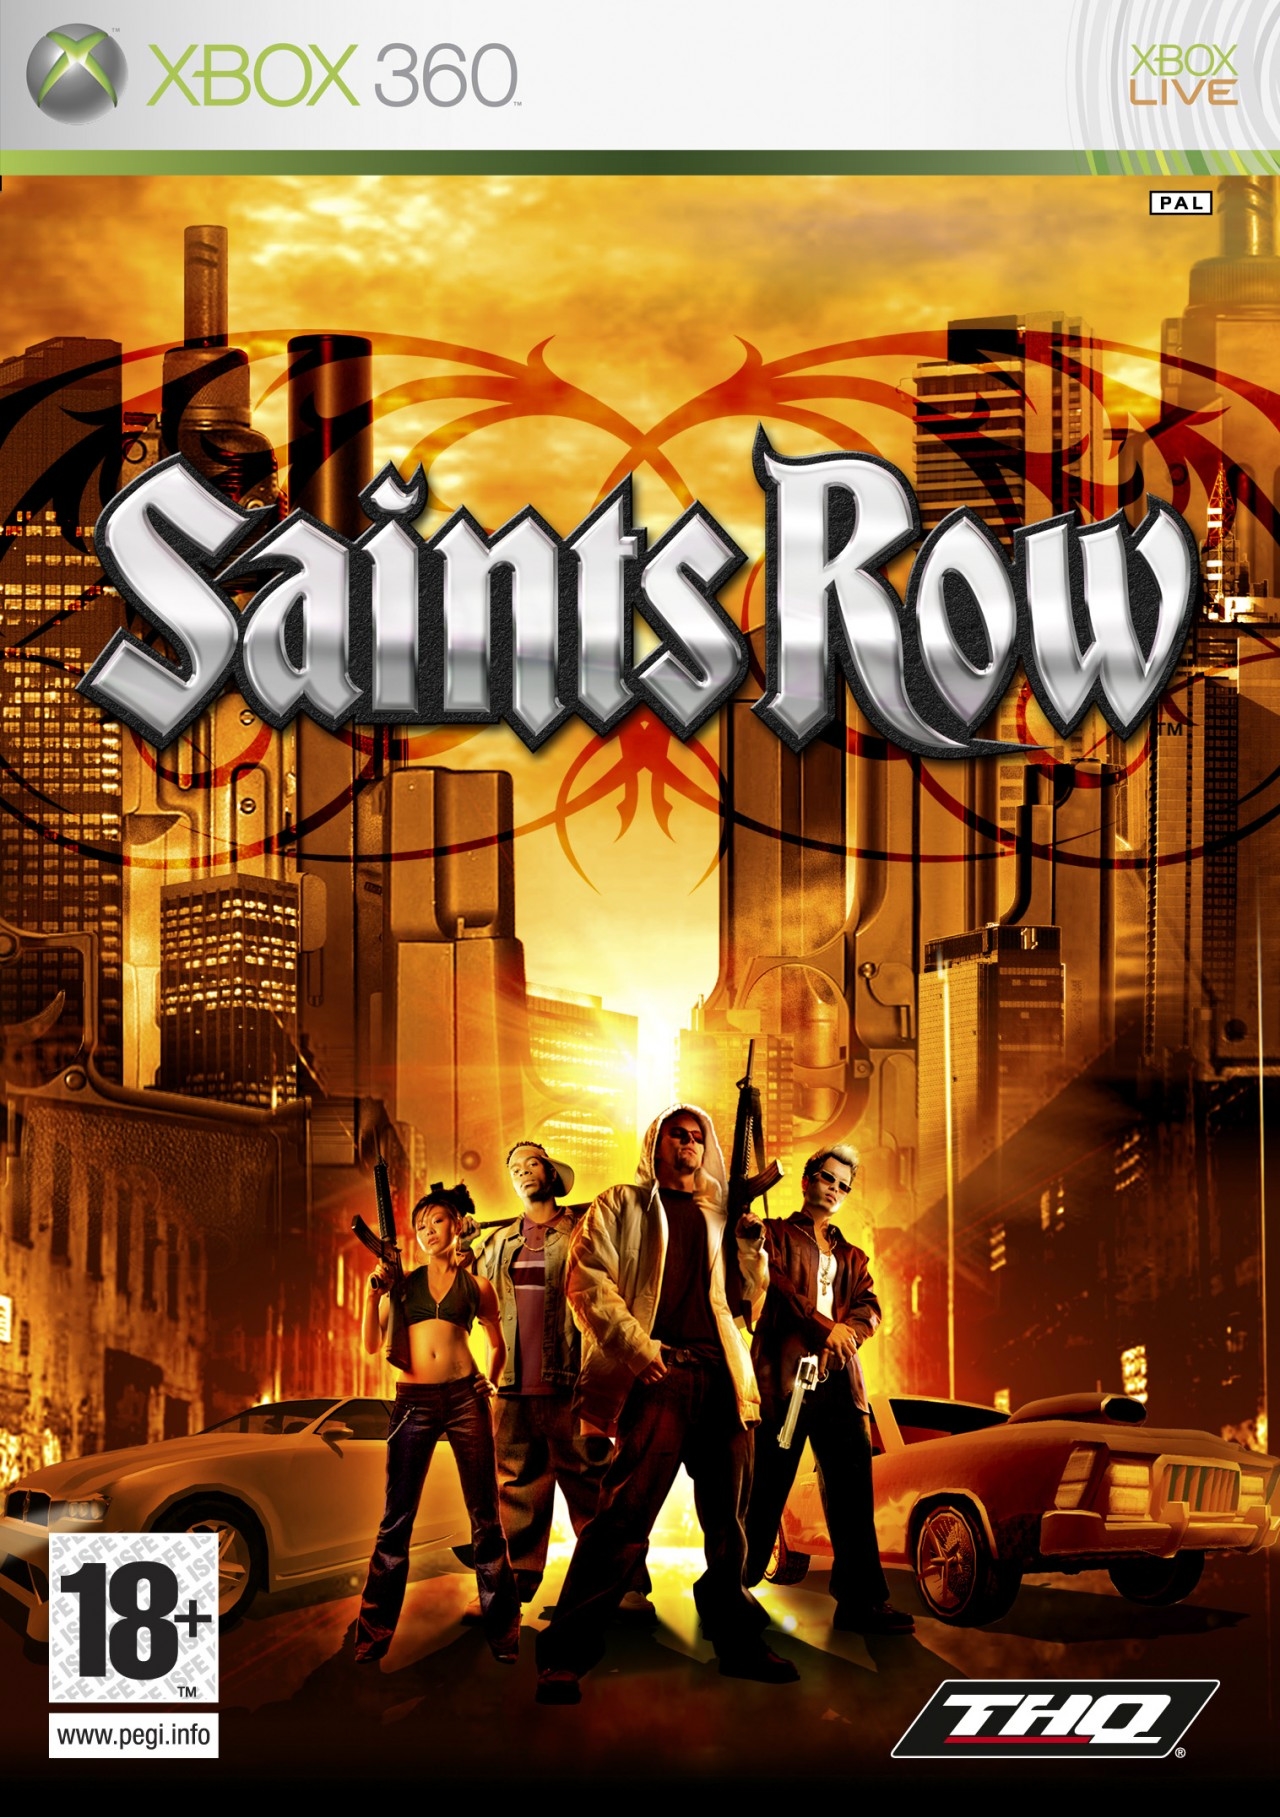 saint row 2022 download free